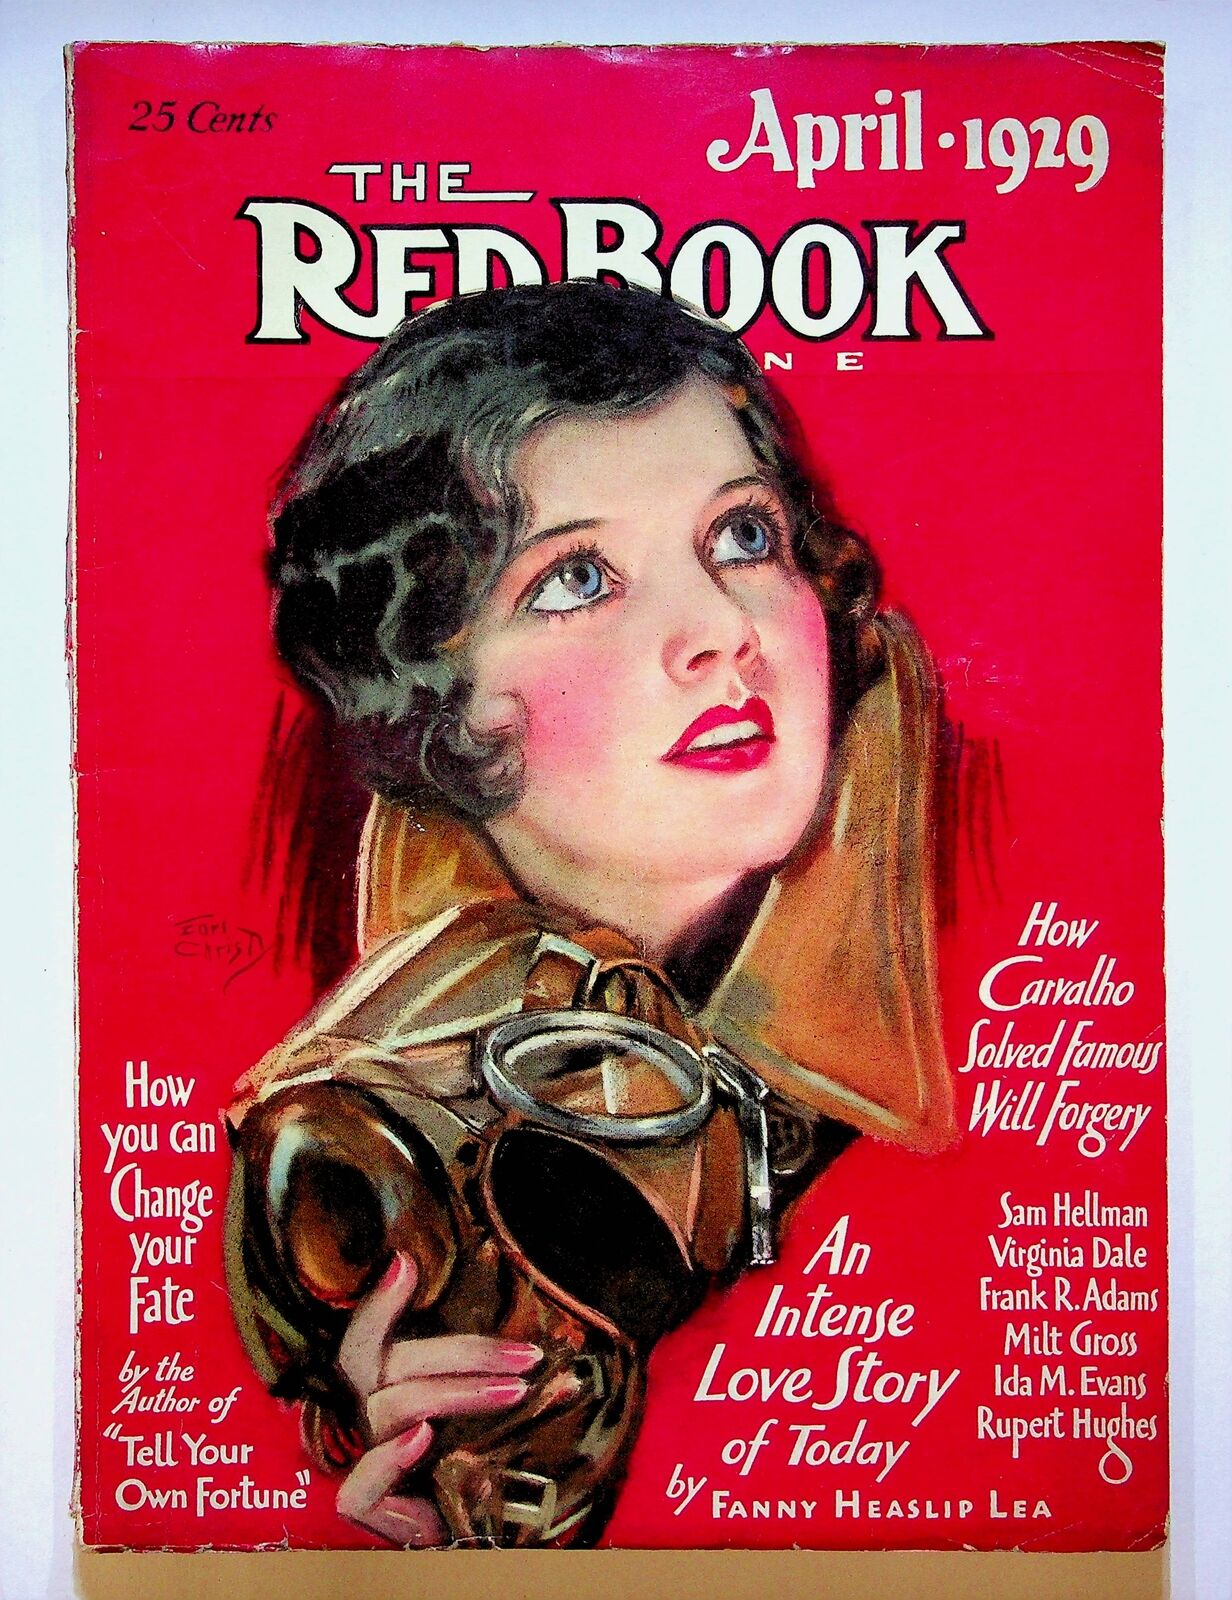 Red Book Magazine Apr 1929 Vol. 52 #6 VG- 3.5